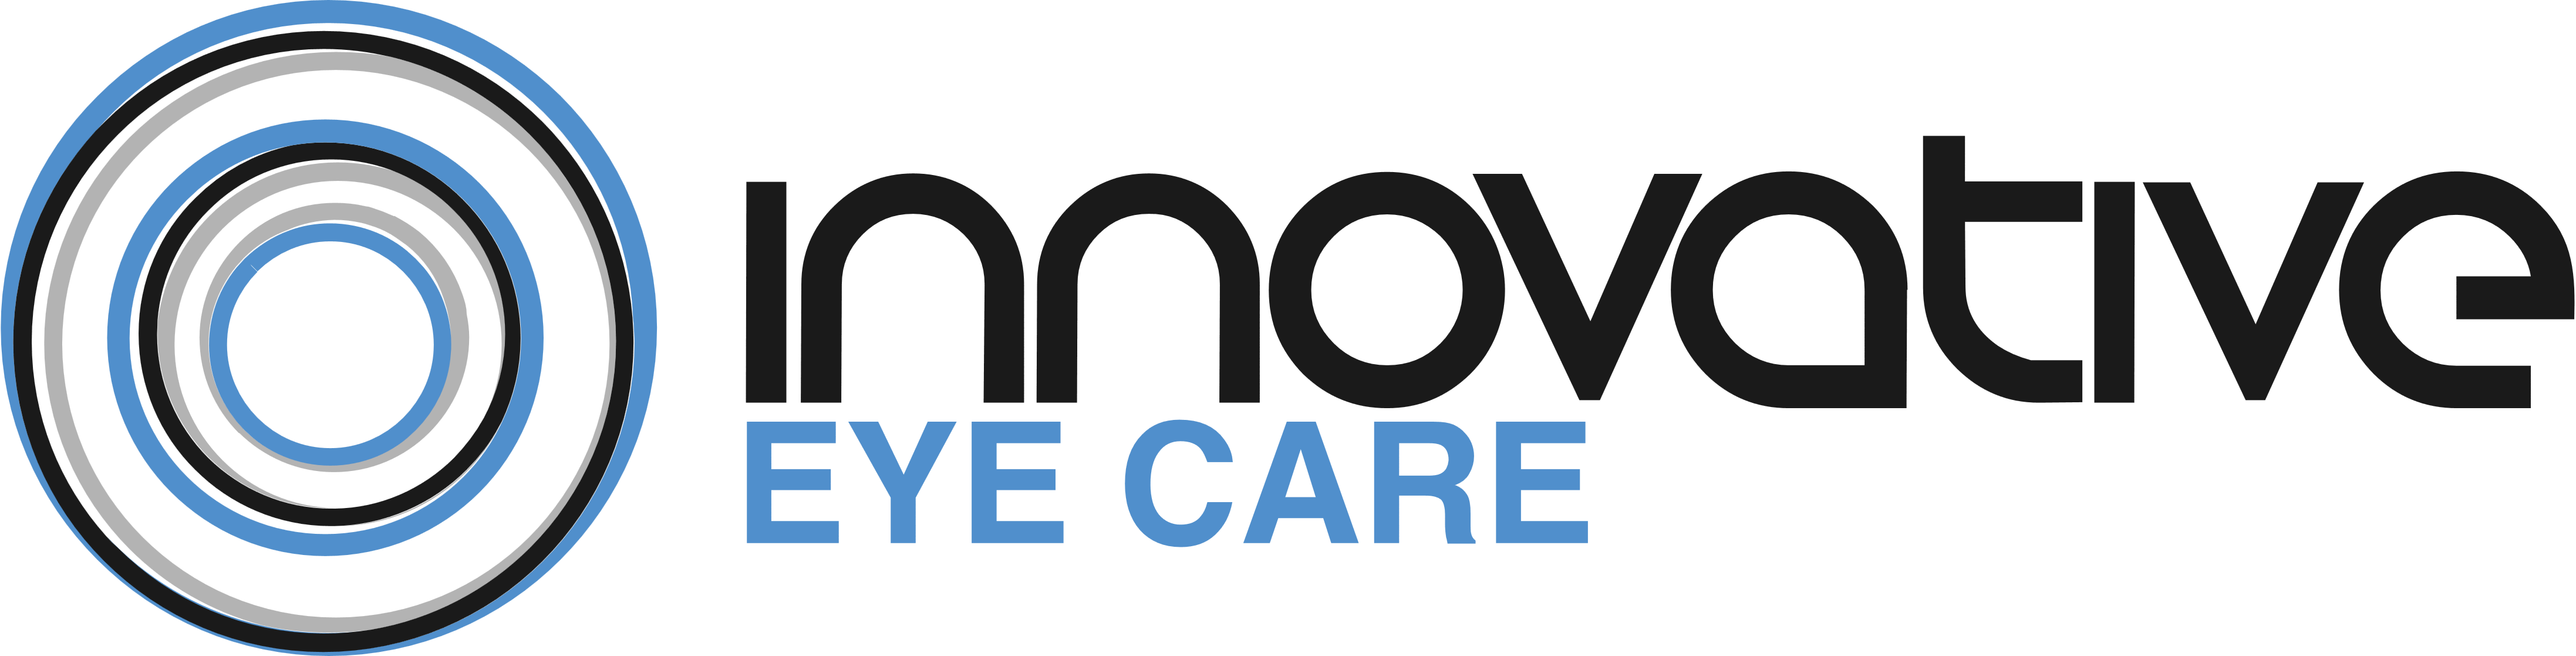 Innovative Eye Care – Logos Download